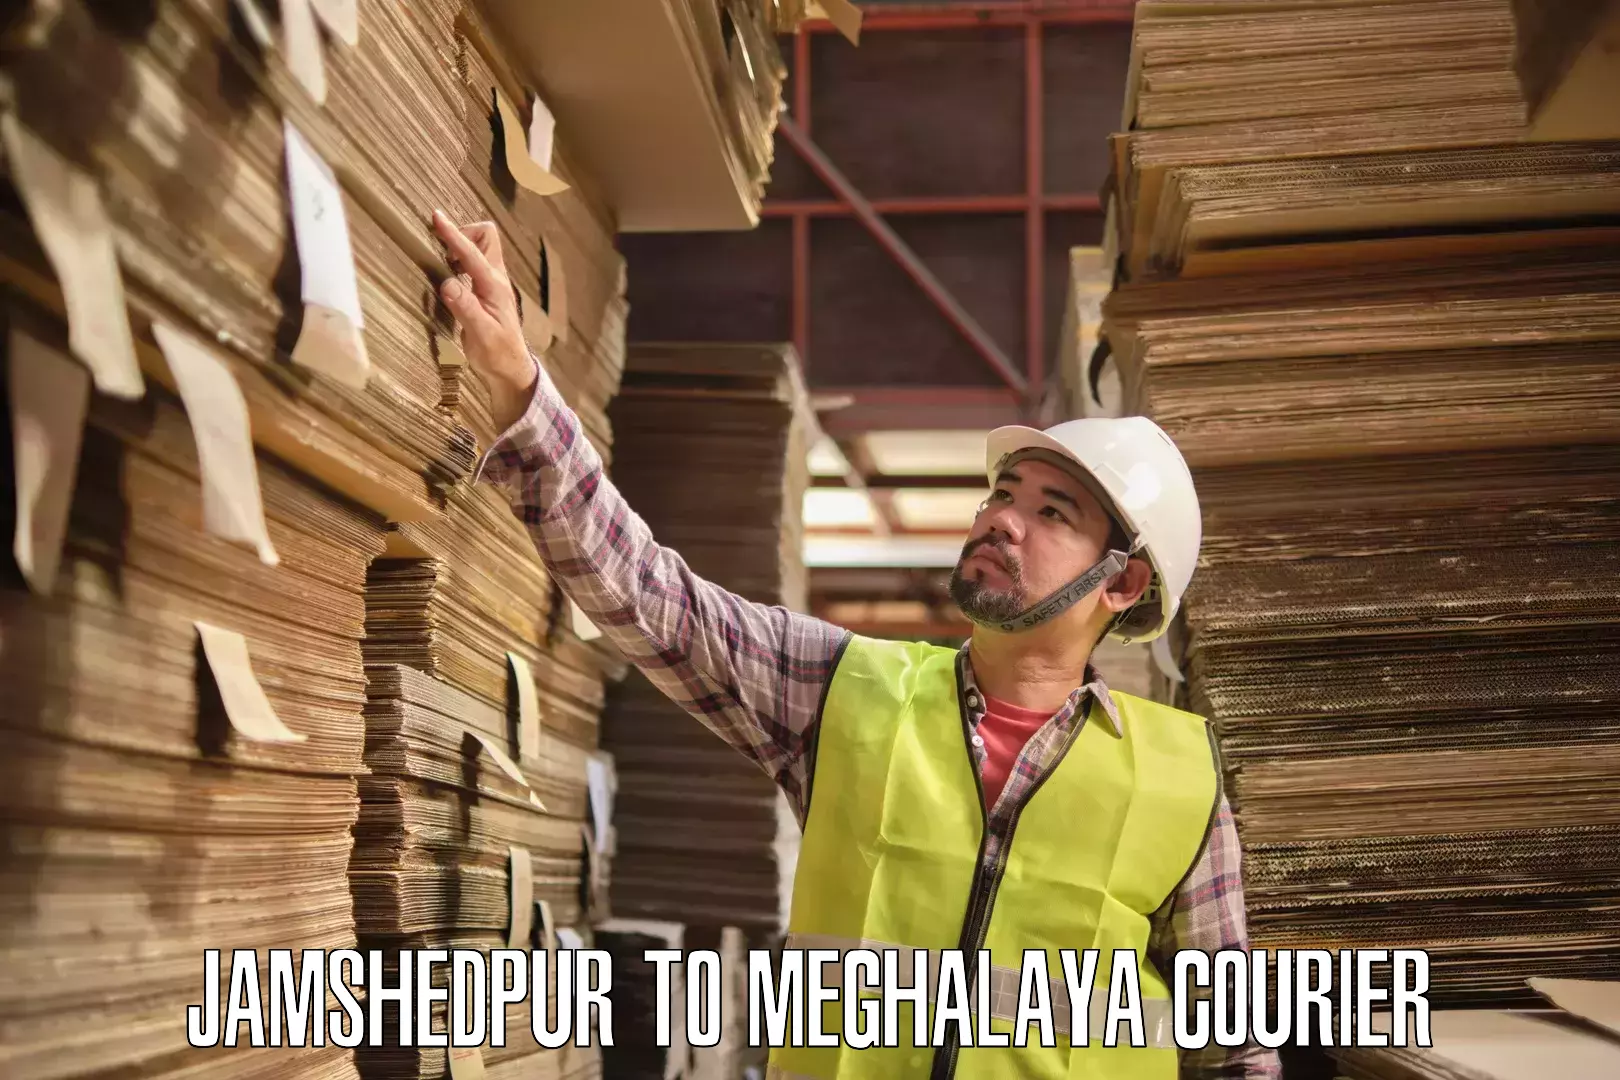 Courier service innovation Jamshedpur to Meghalaya